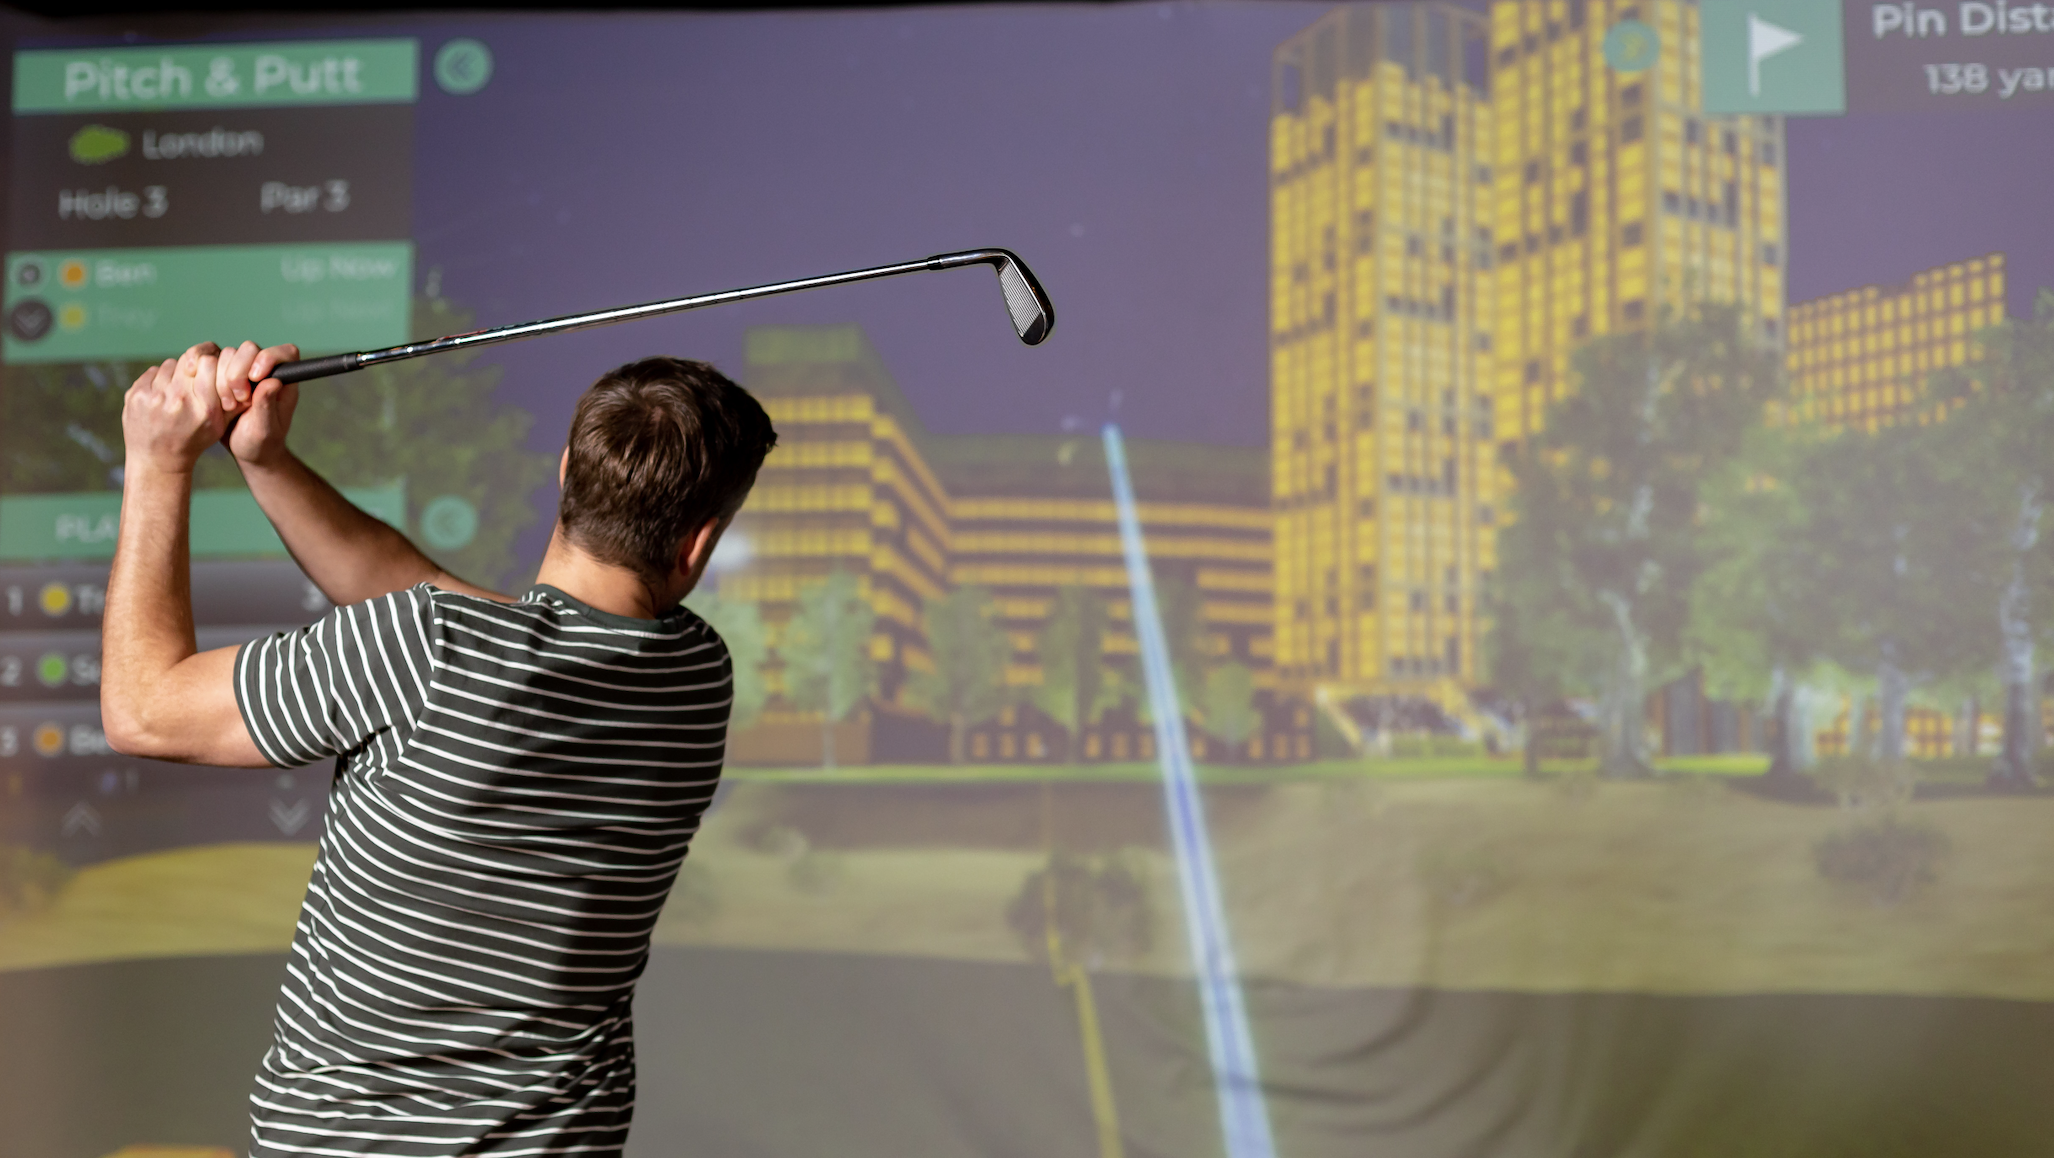 Pitch n Putt Social Fun Golf Game in London venues